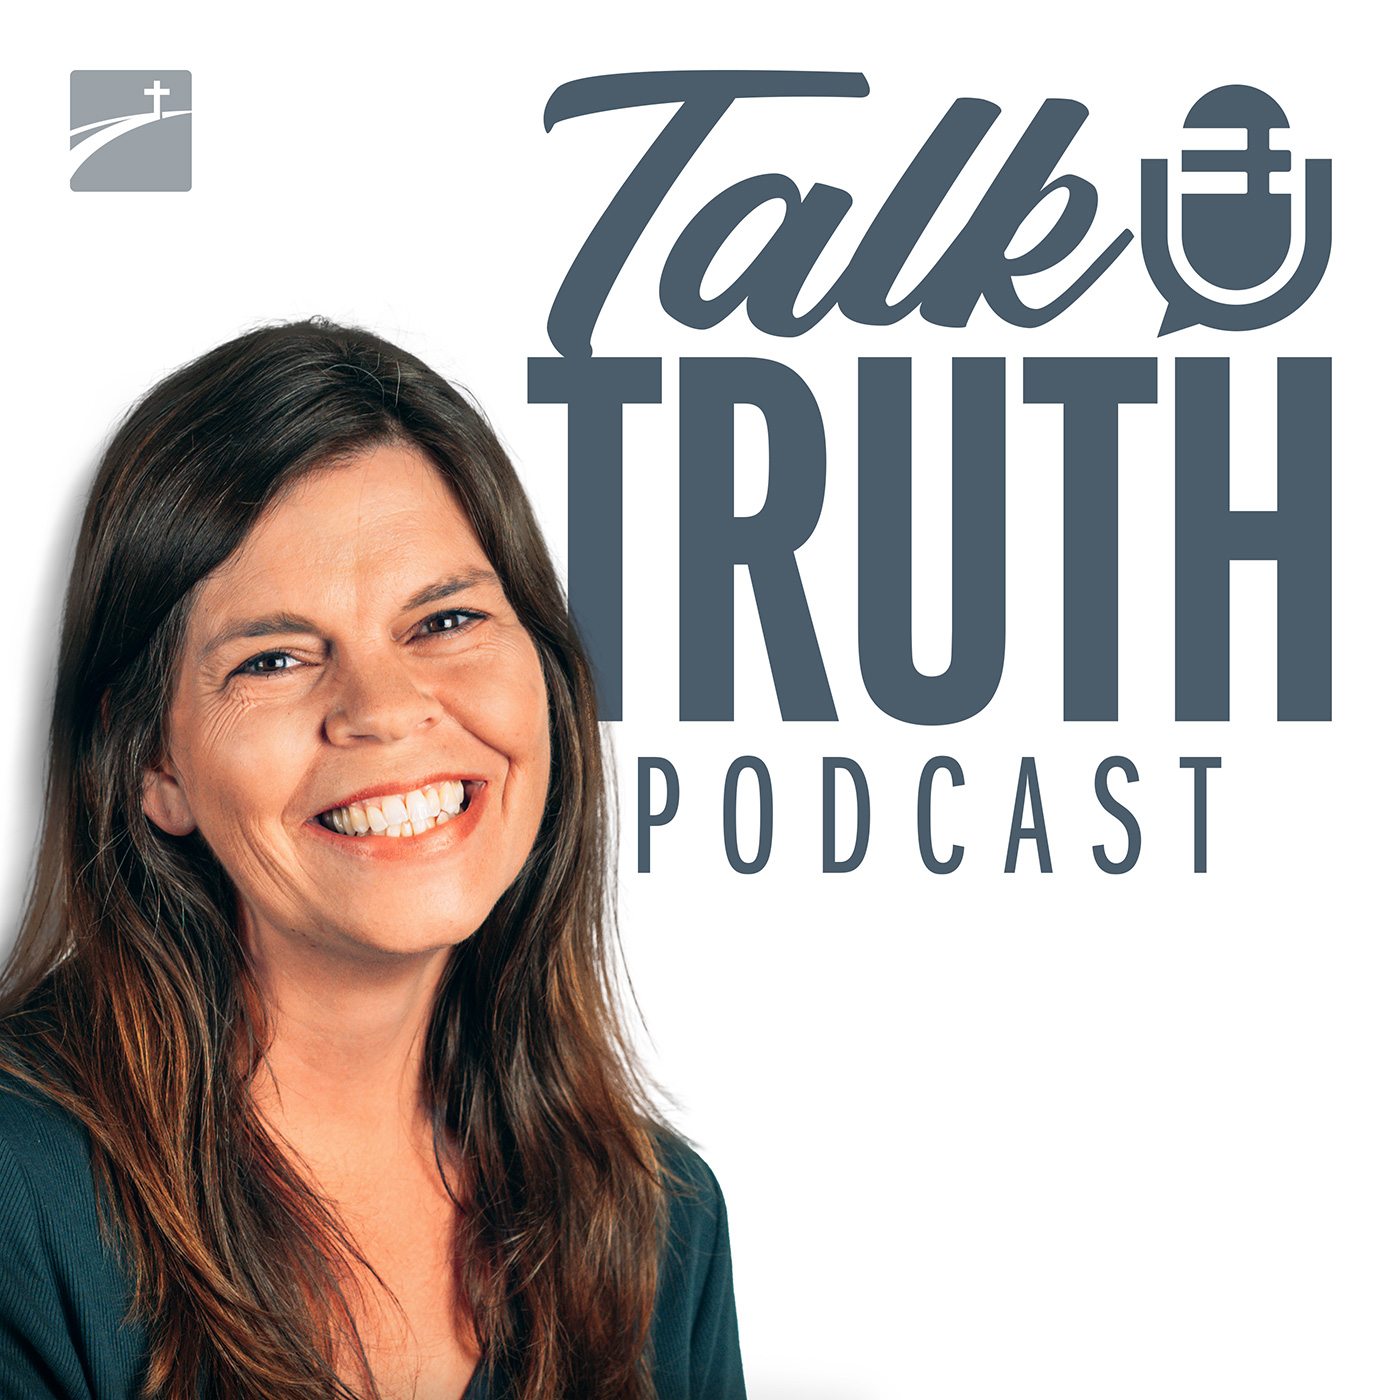 Talk Truth Podcast